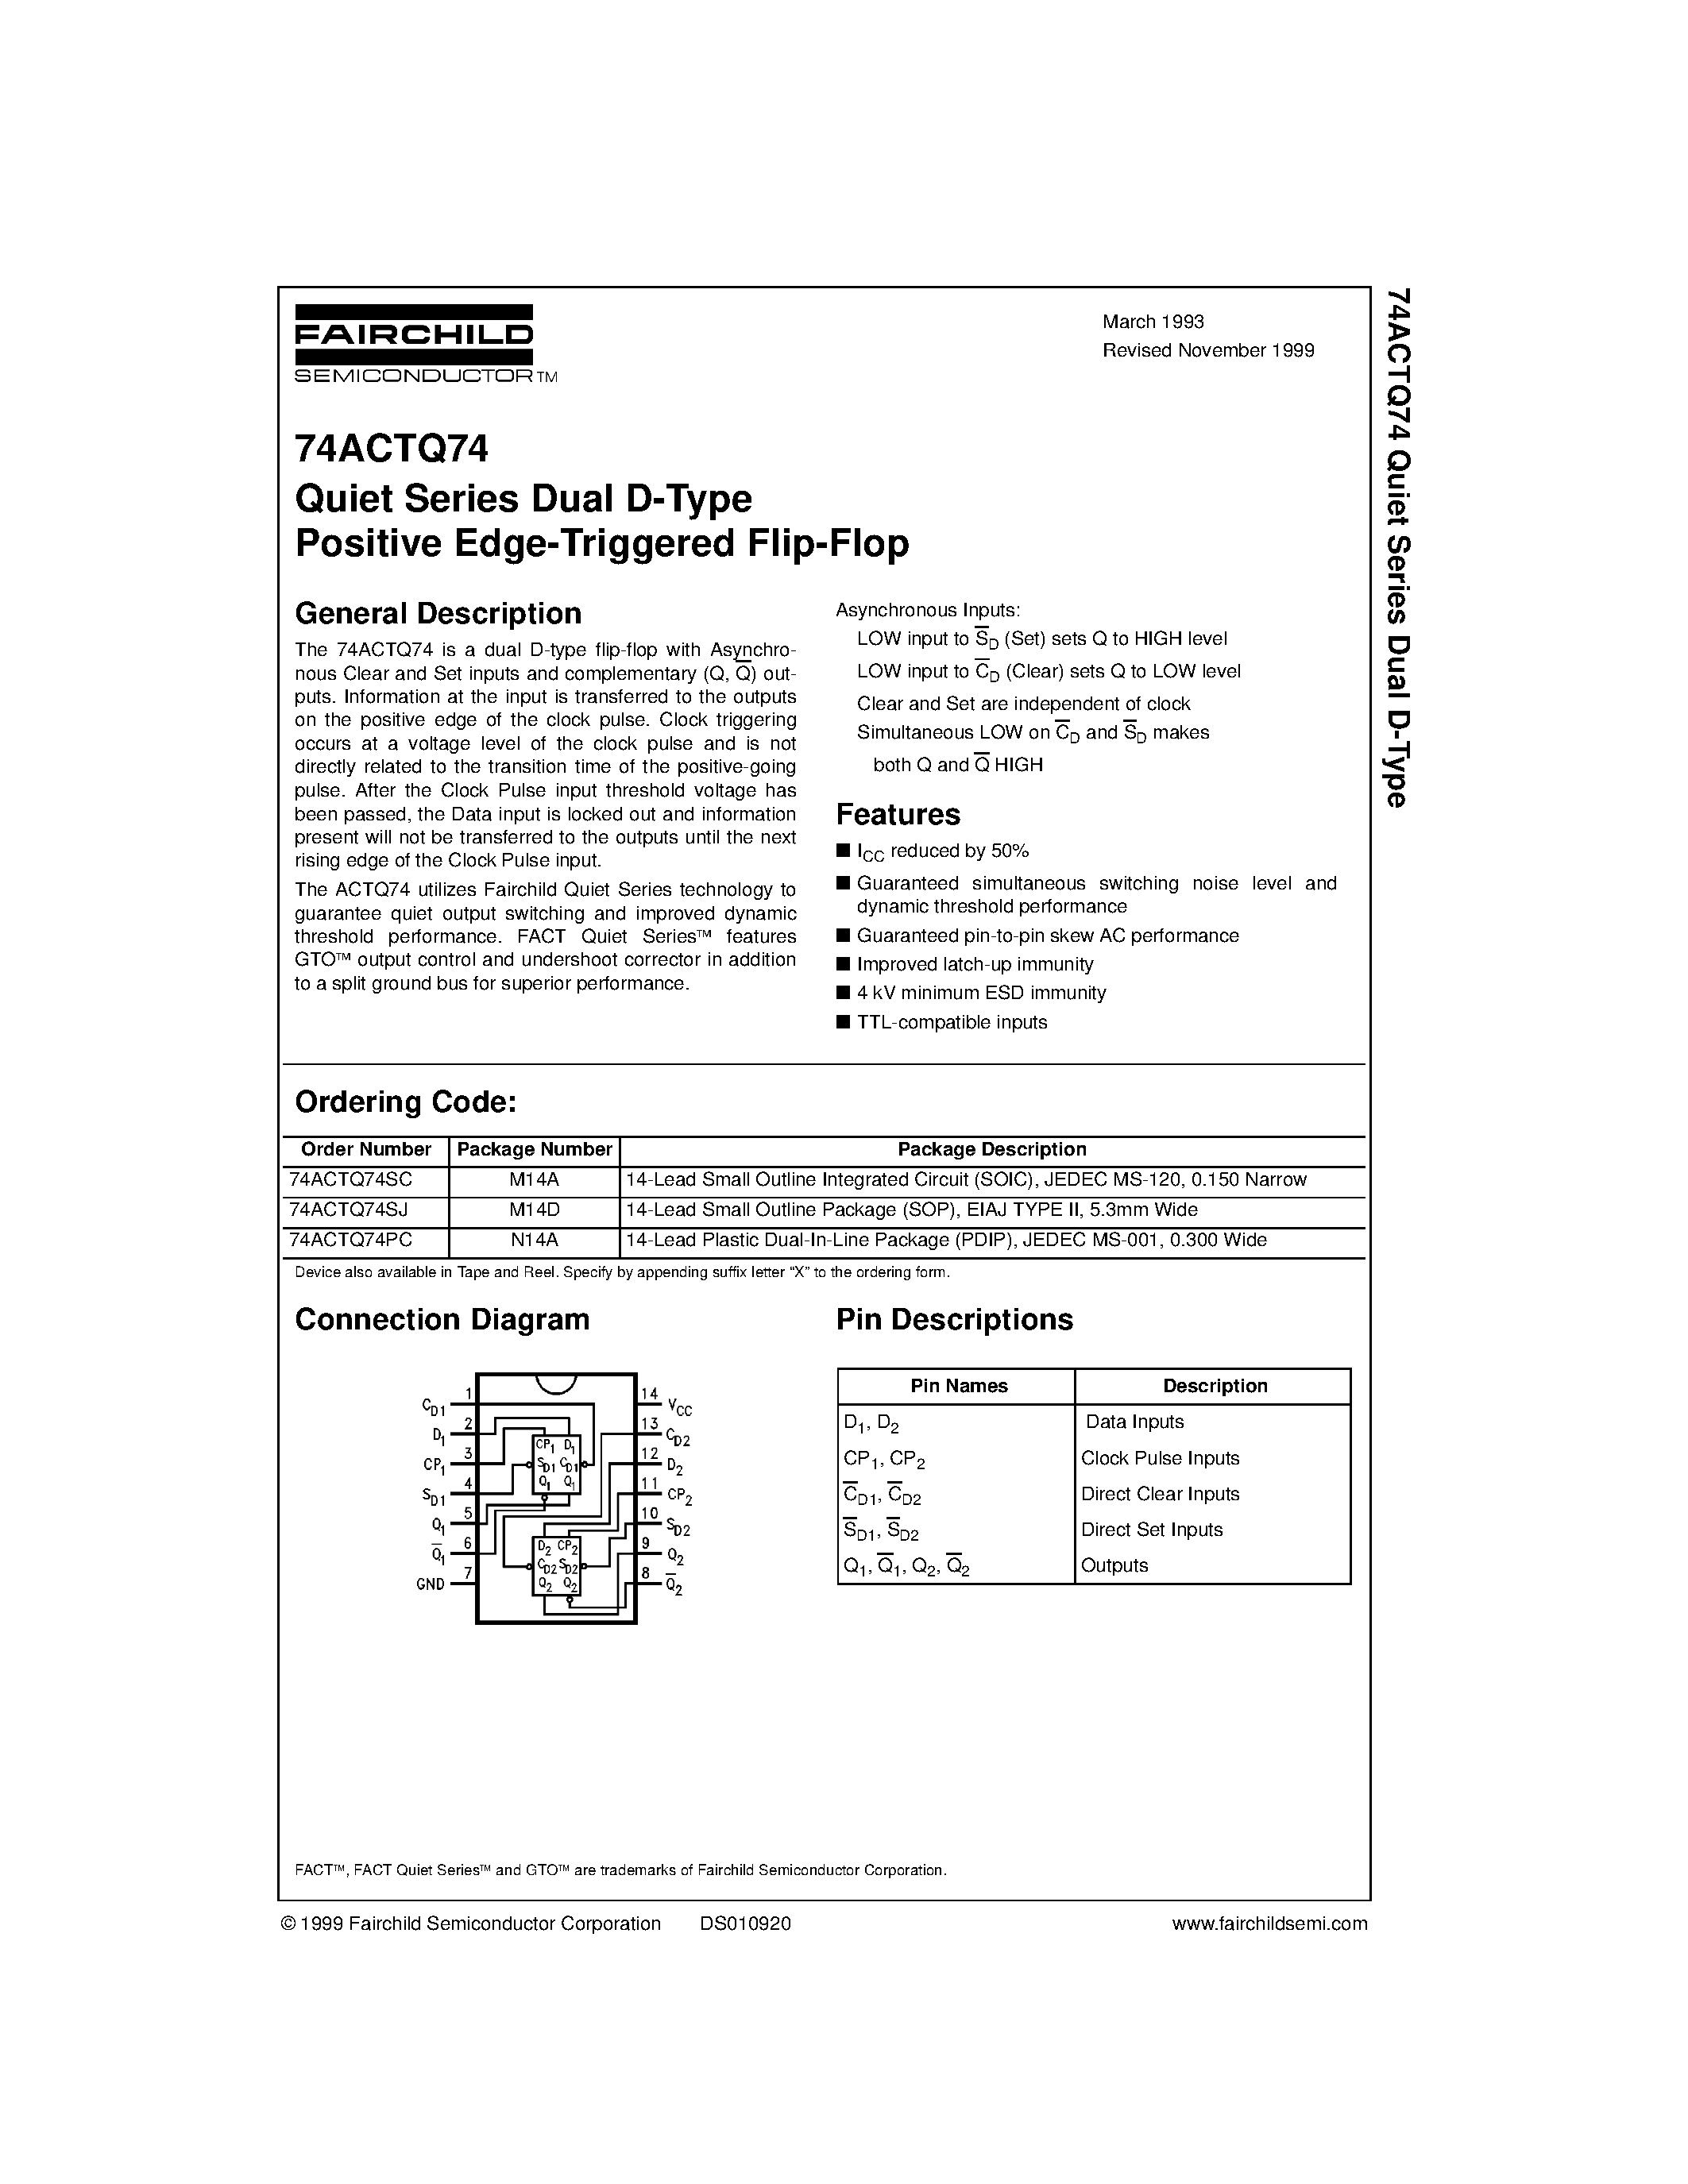 Datasheet 74ACTQ74PC - Quiet Series Dual D-Type Positive Edge-Triggered Flip-Flop page 1